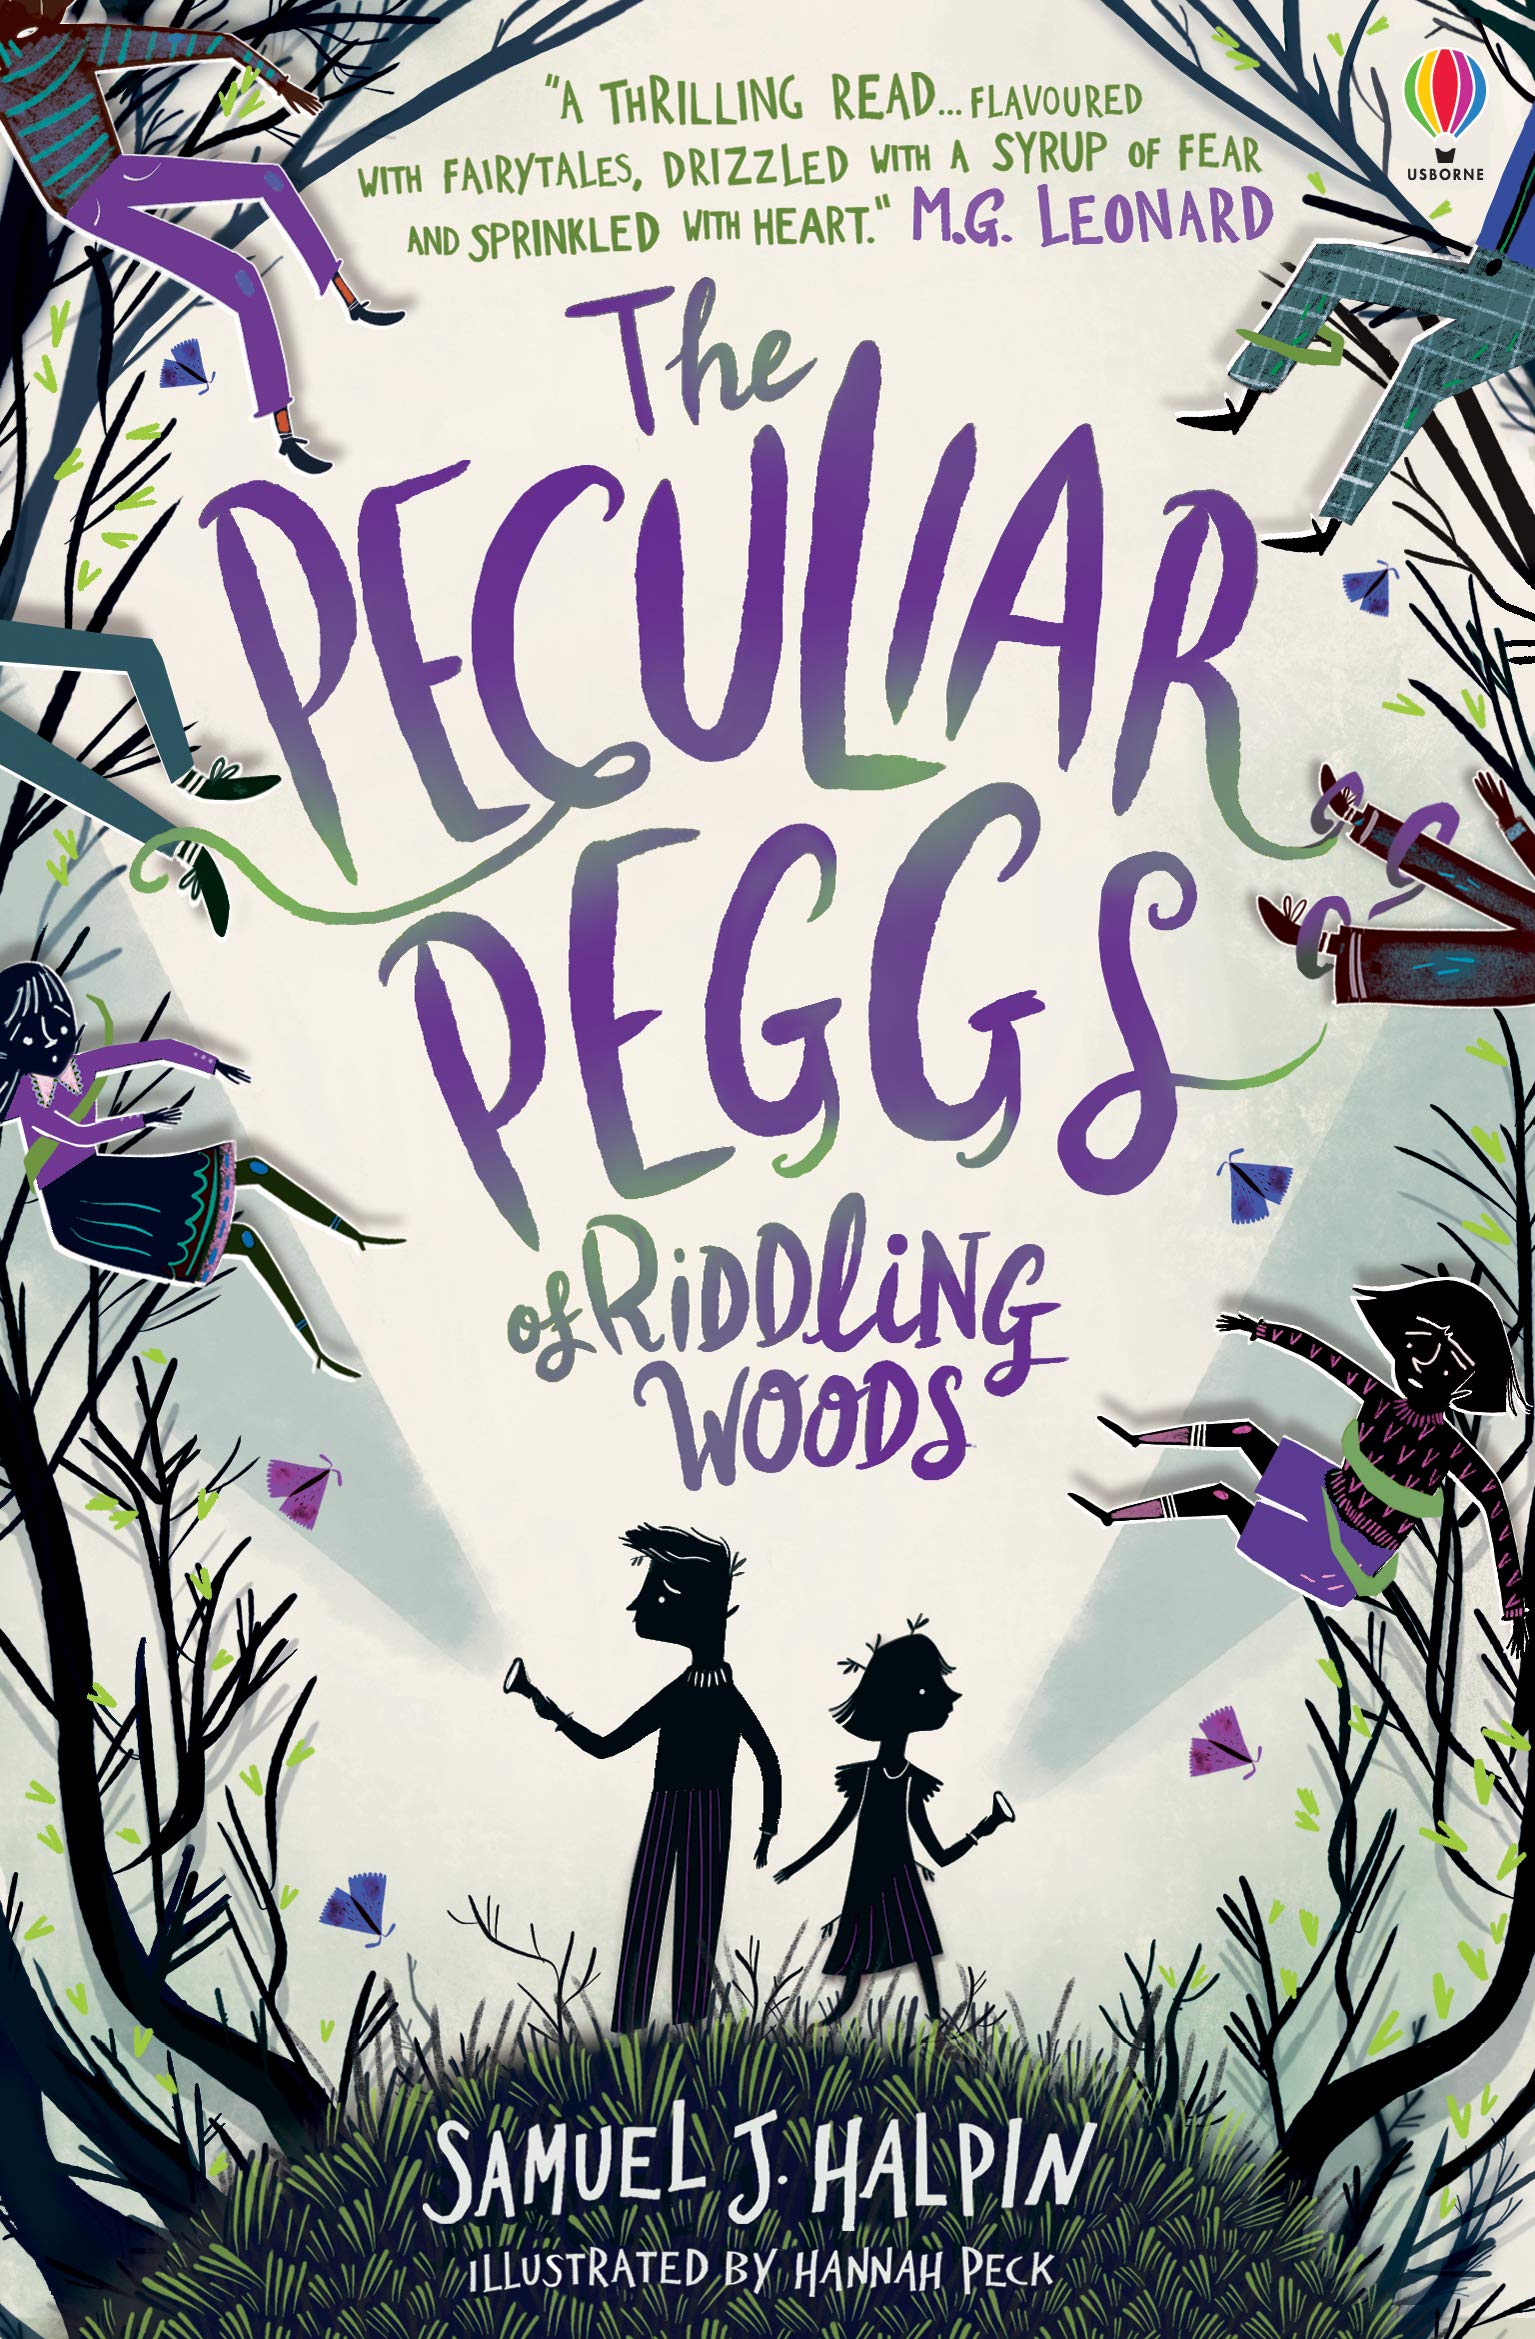 The Peculiar Peggs of Riddling Woods | Samuel J. Halpin